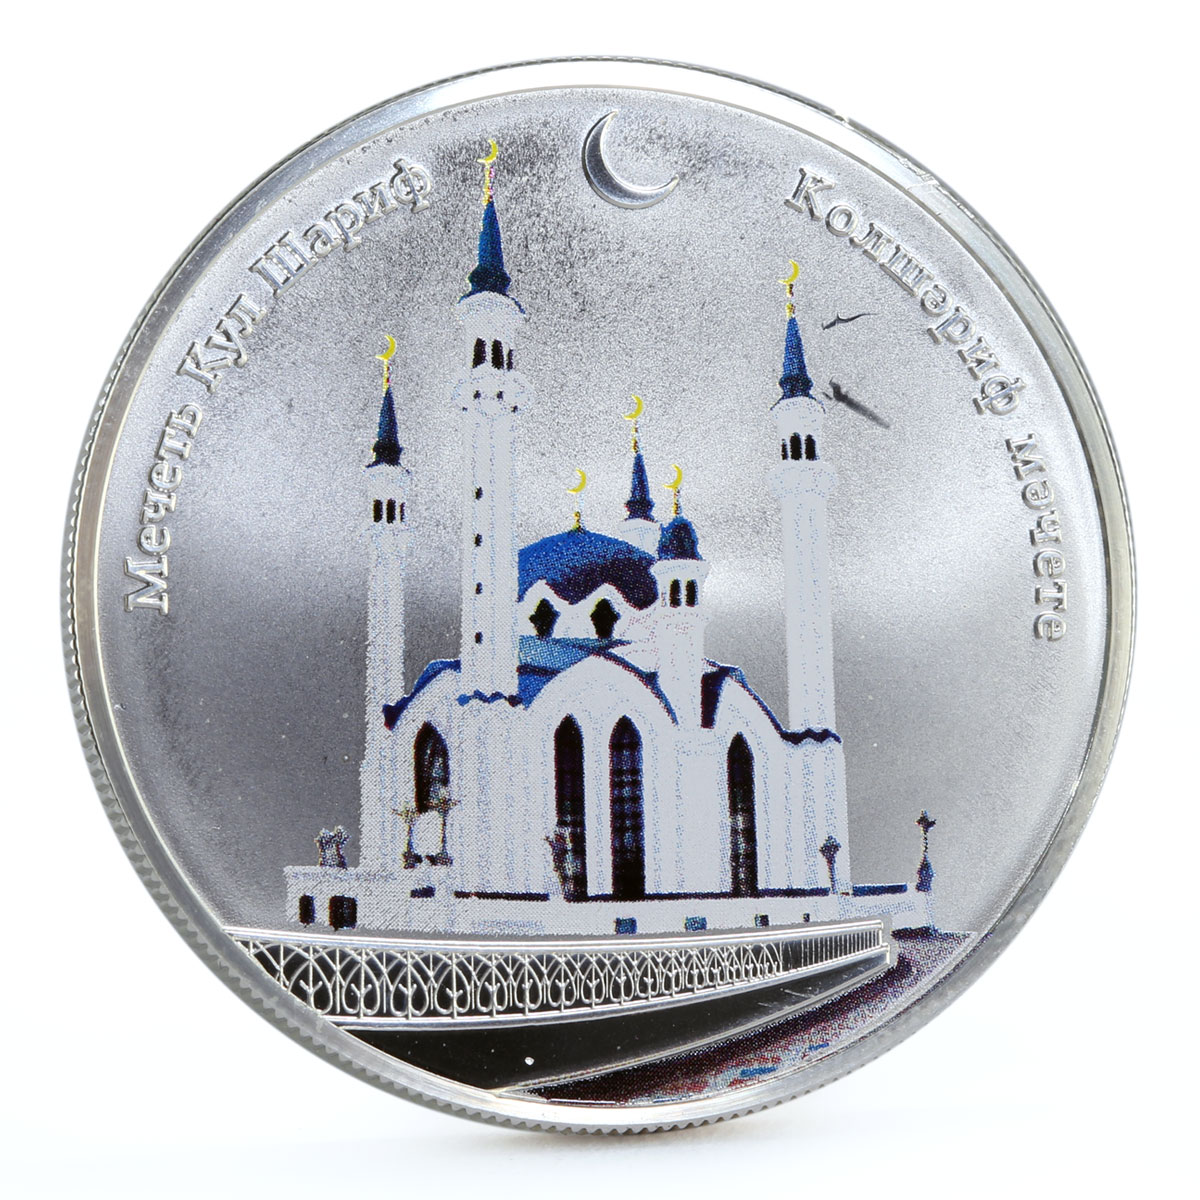 Congo 1000 francs Kul Sharif Mosque in Kazan Islam colored silver coin 2013